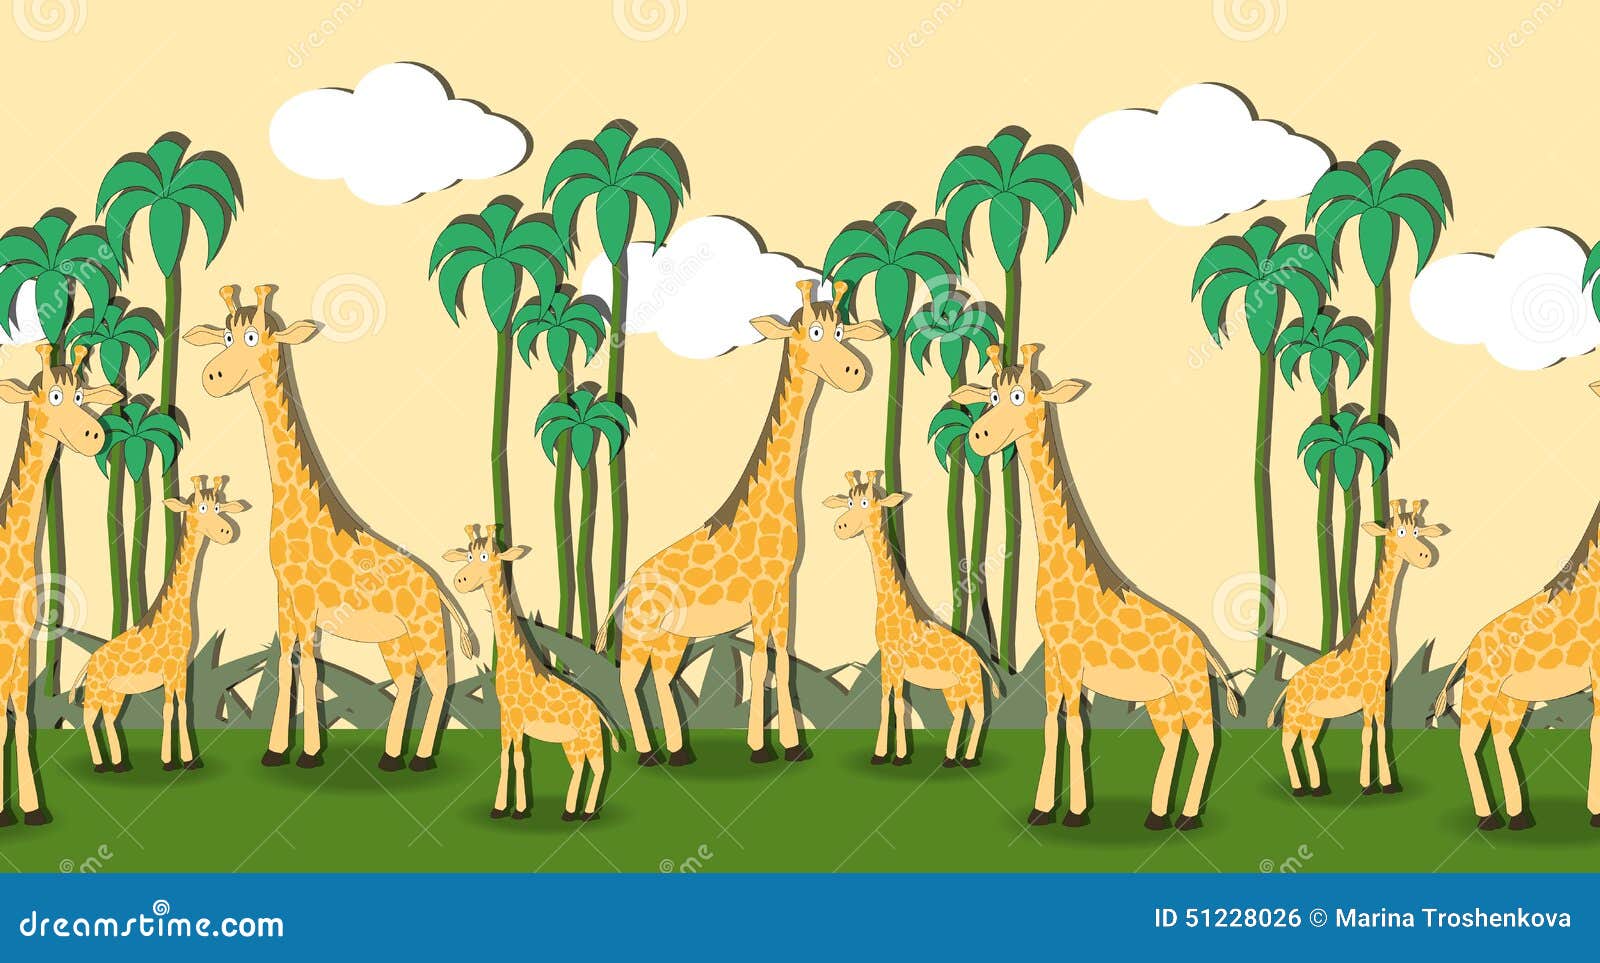 seamless pattern with cartoon giraffes